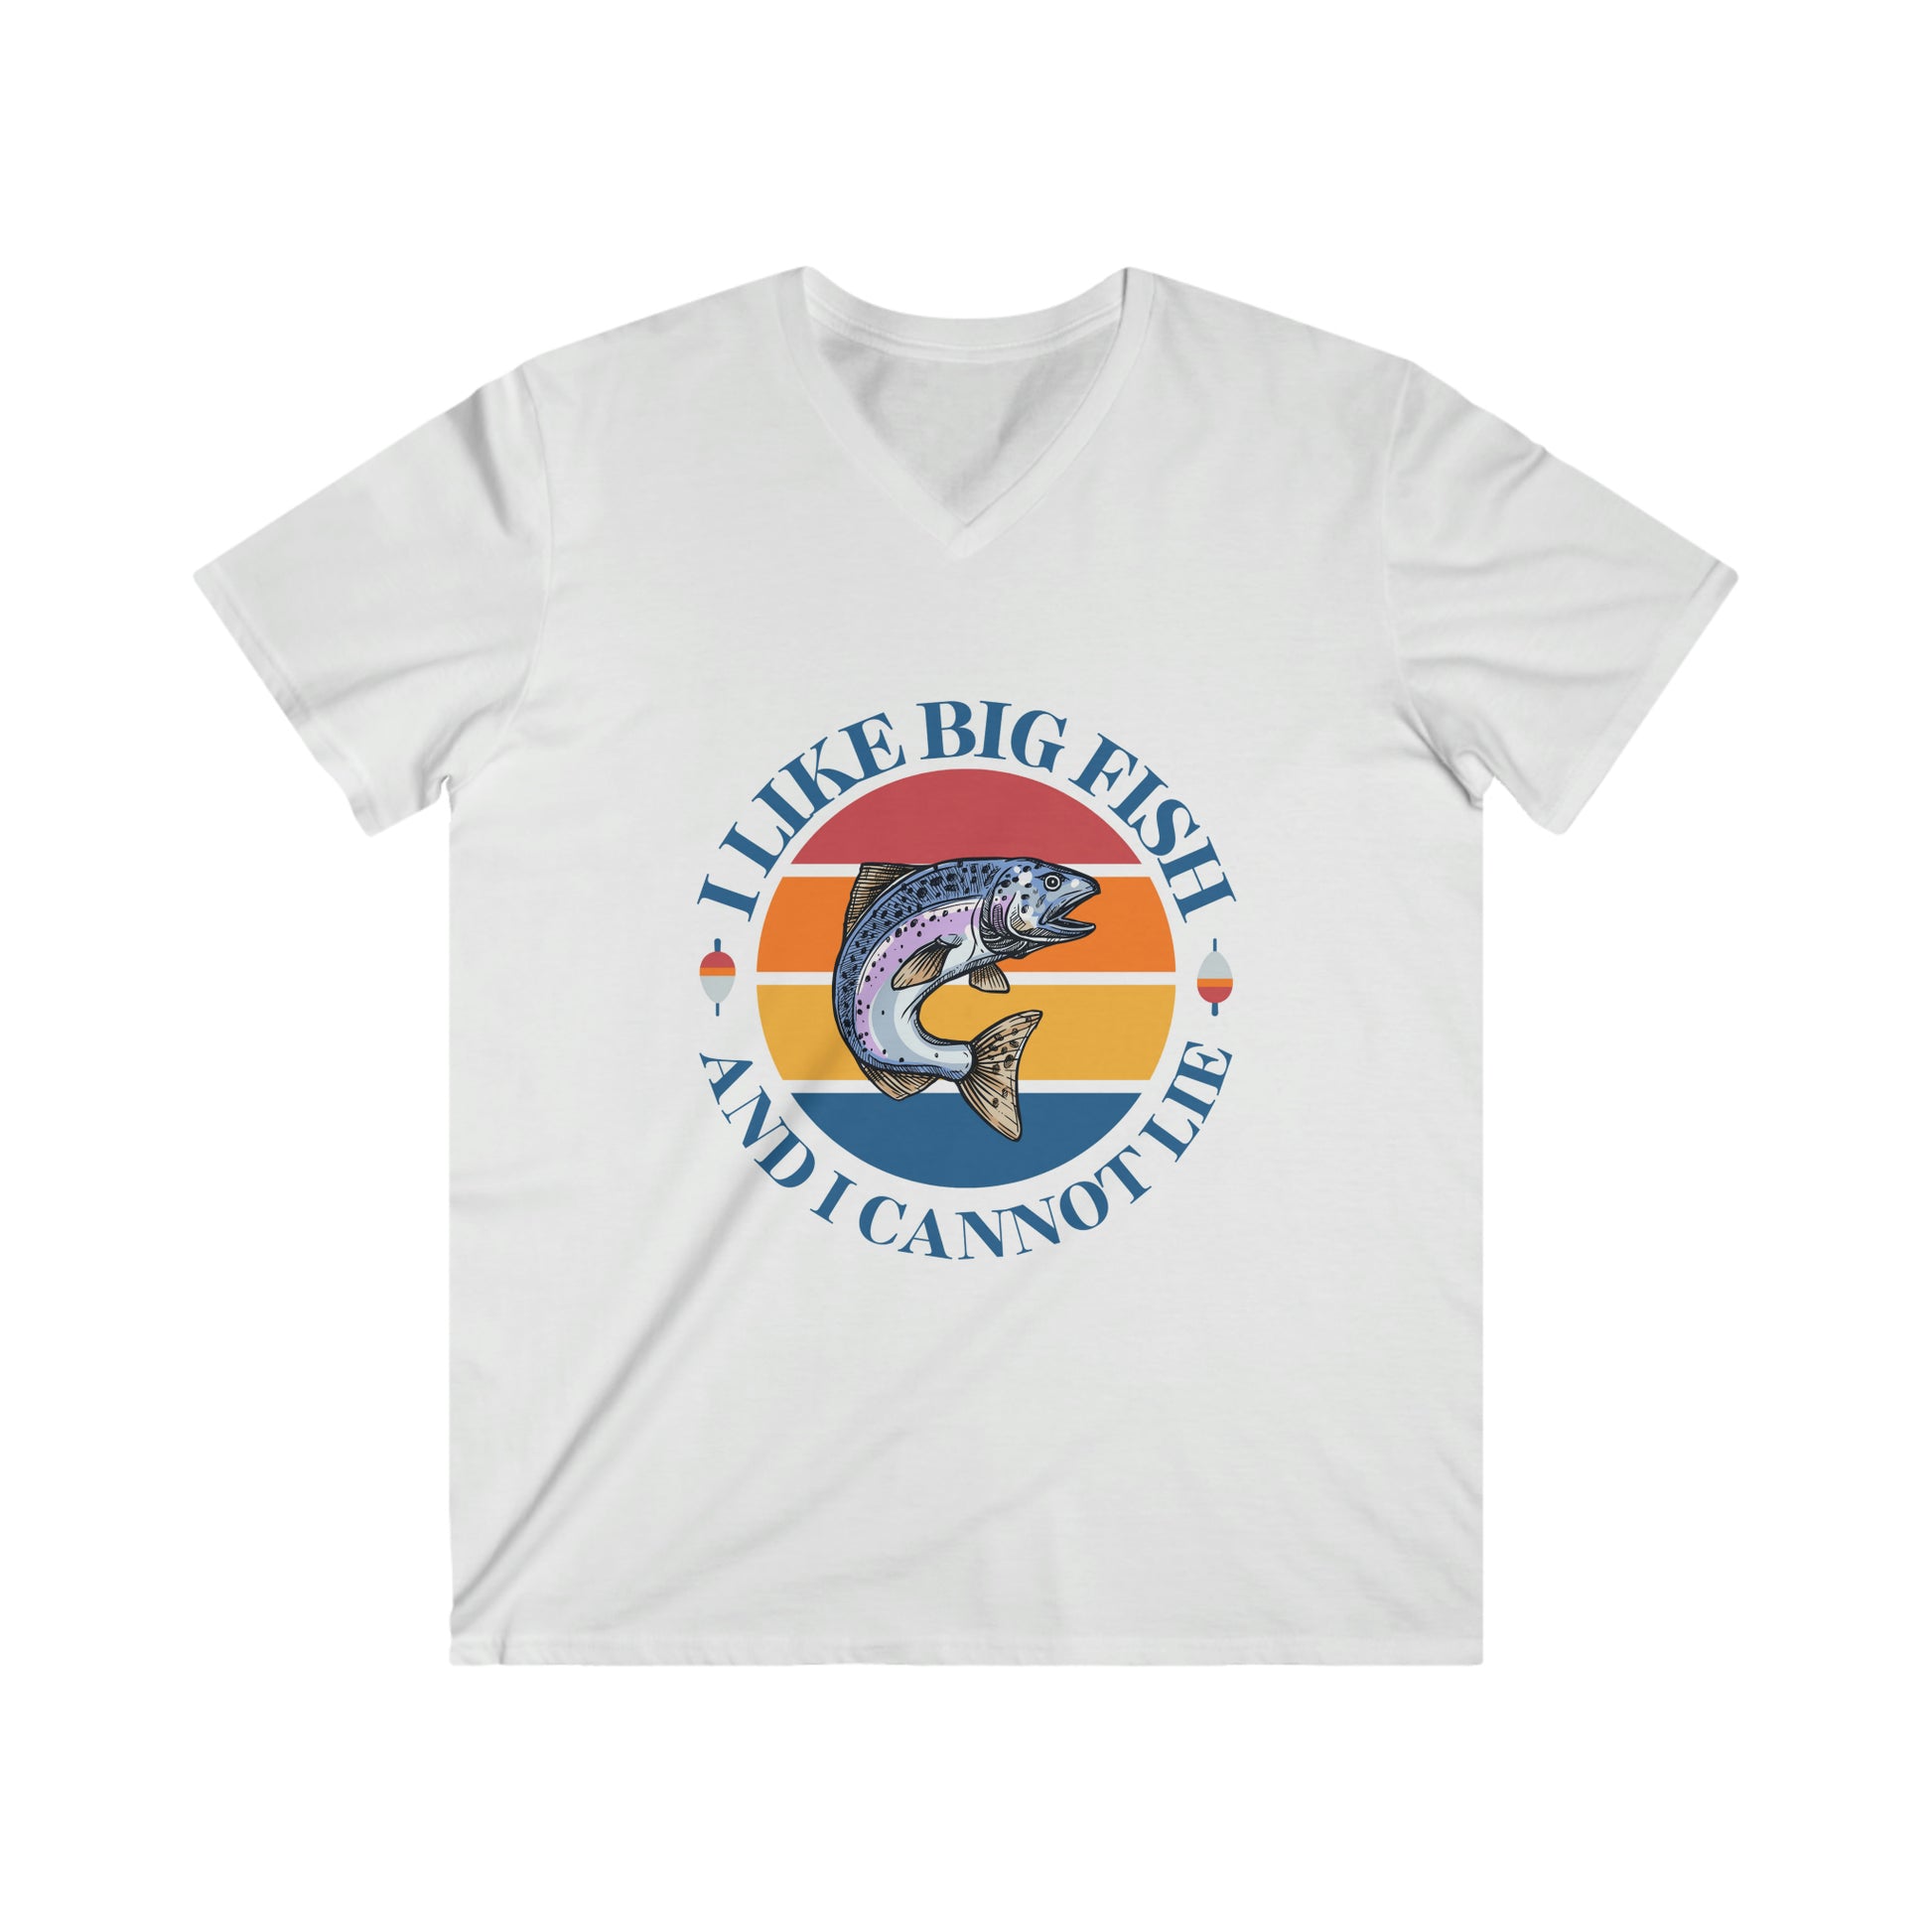 I Like Big Fish - Men's Fitted V-Neck Short Sleeve T-Shirt - HobbyMeFree